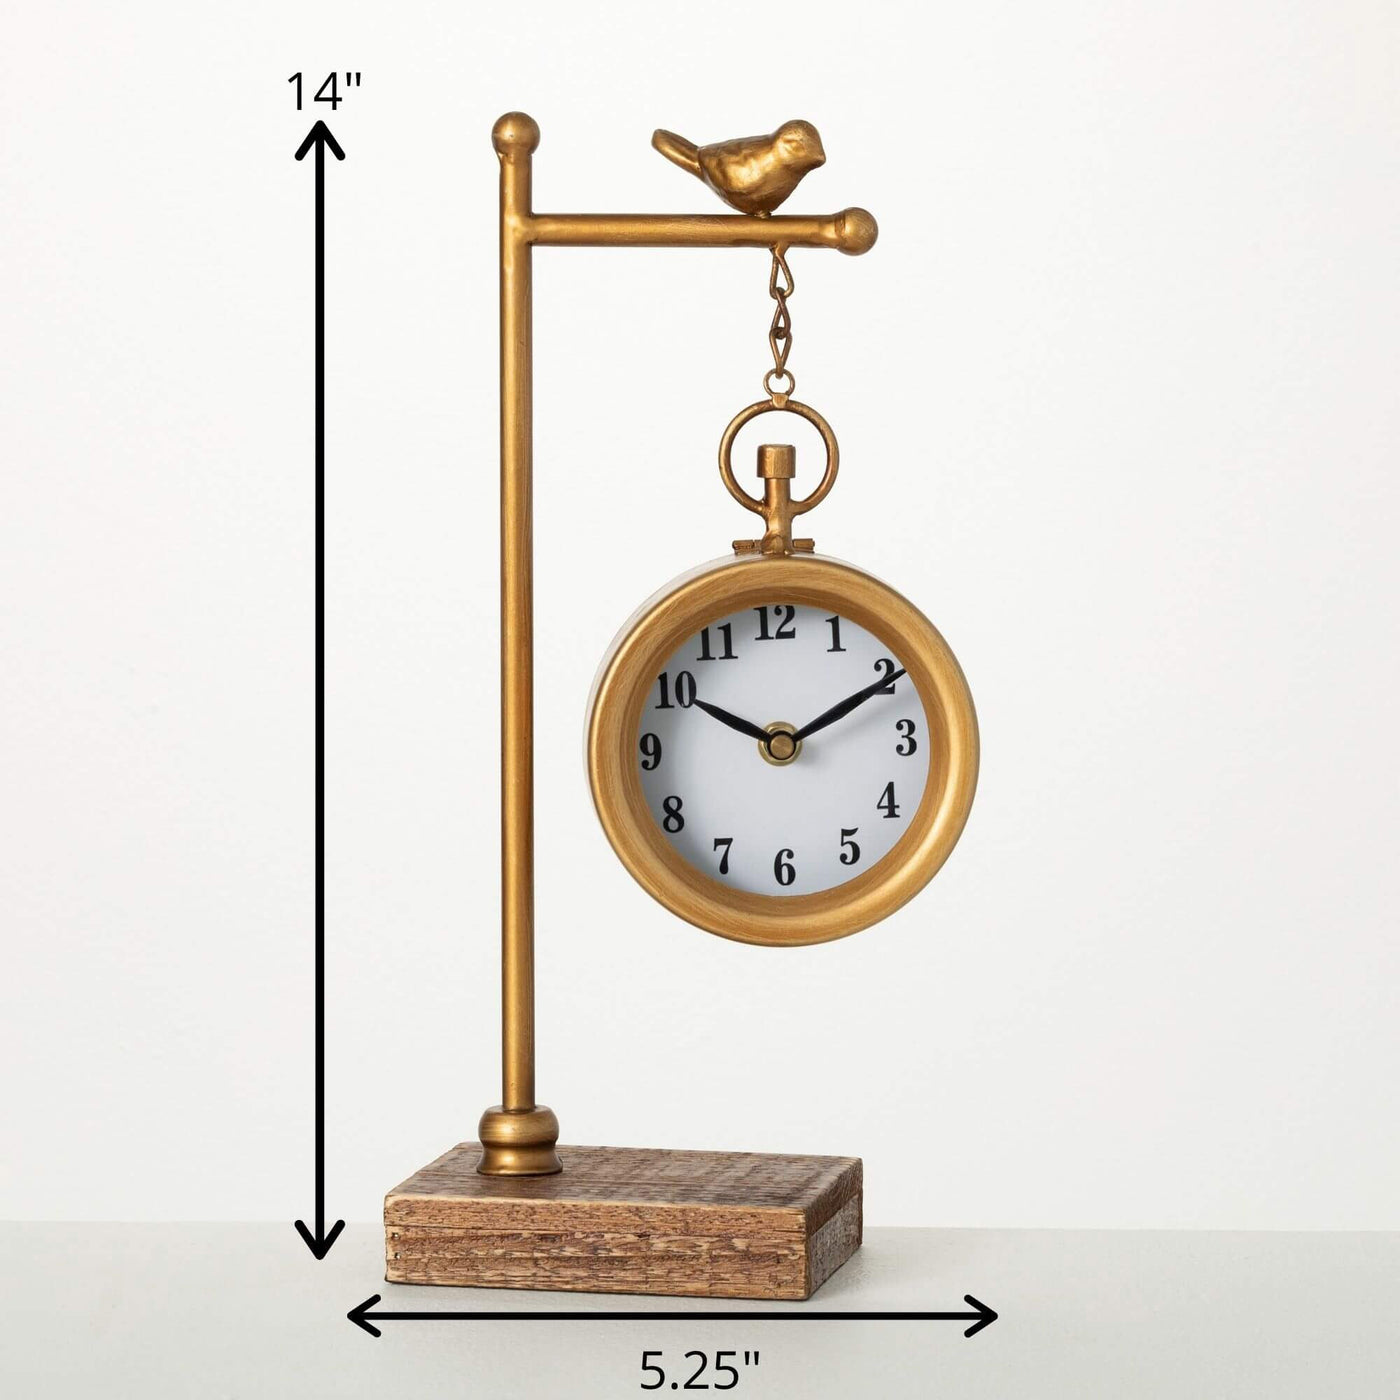 Suspended Tabletop Clock